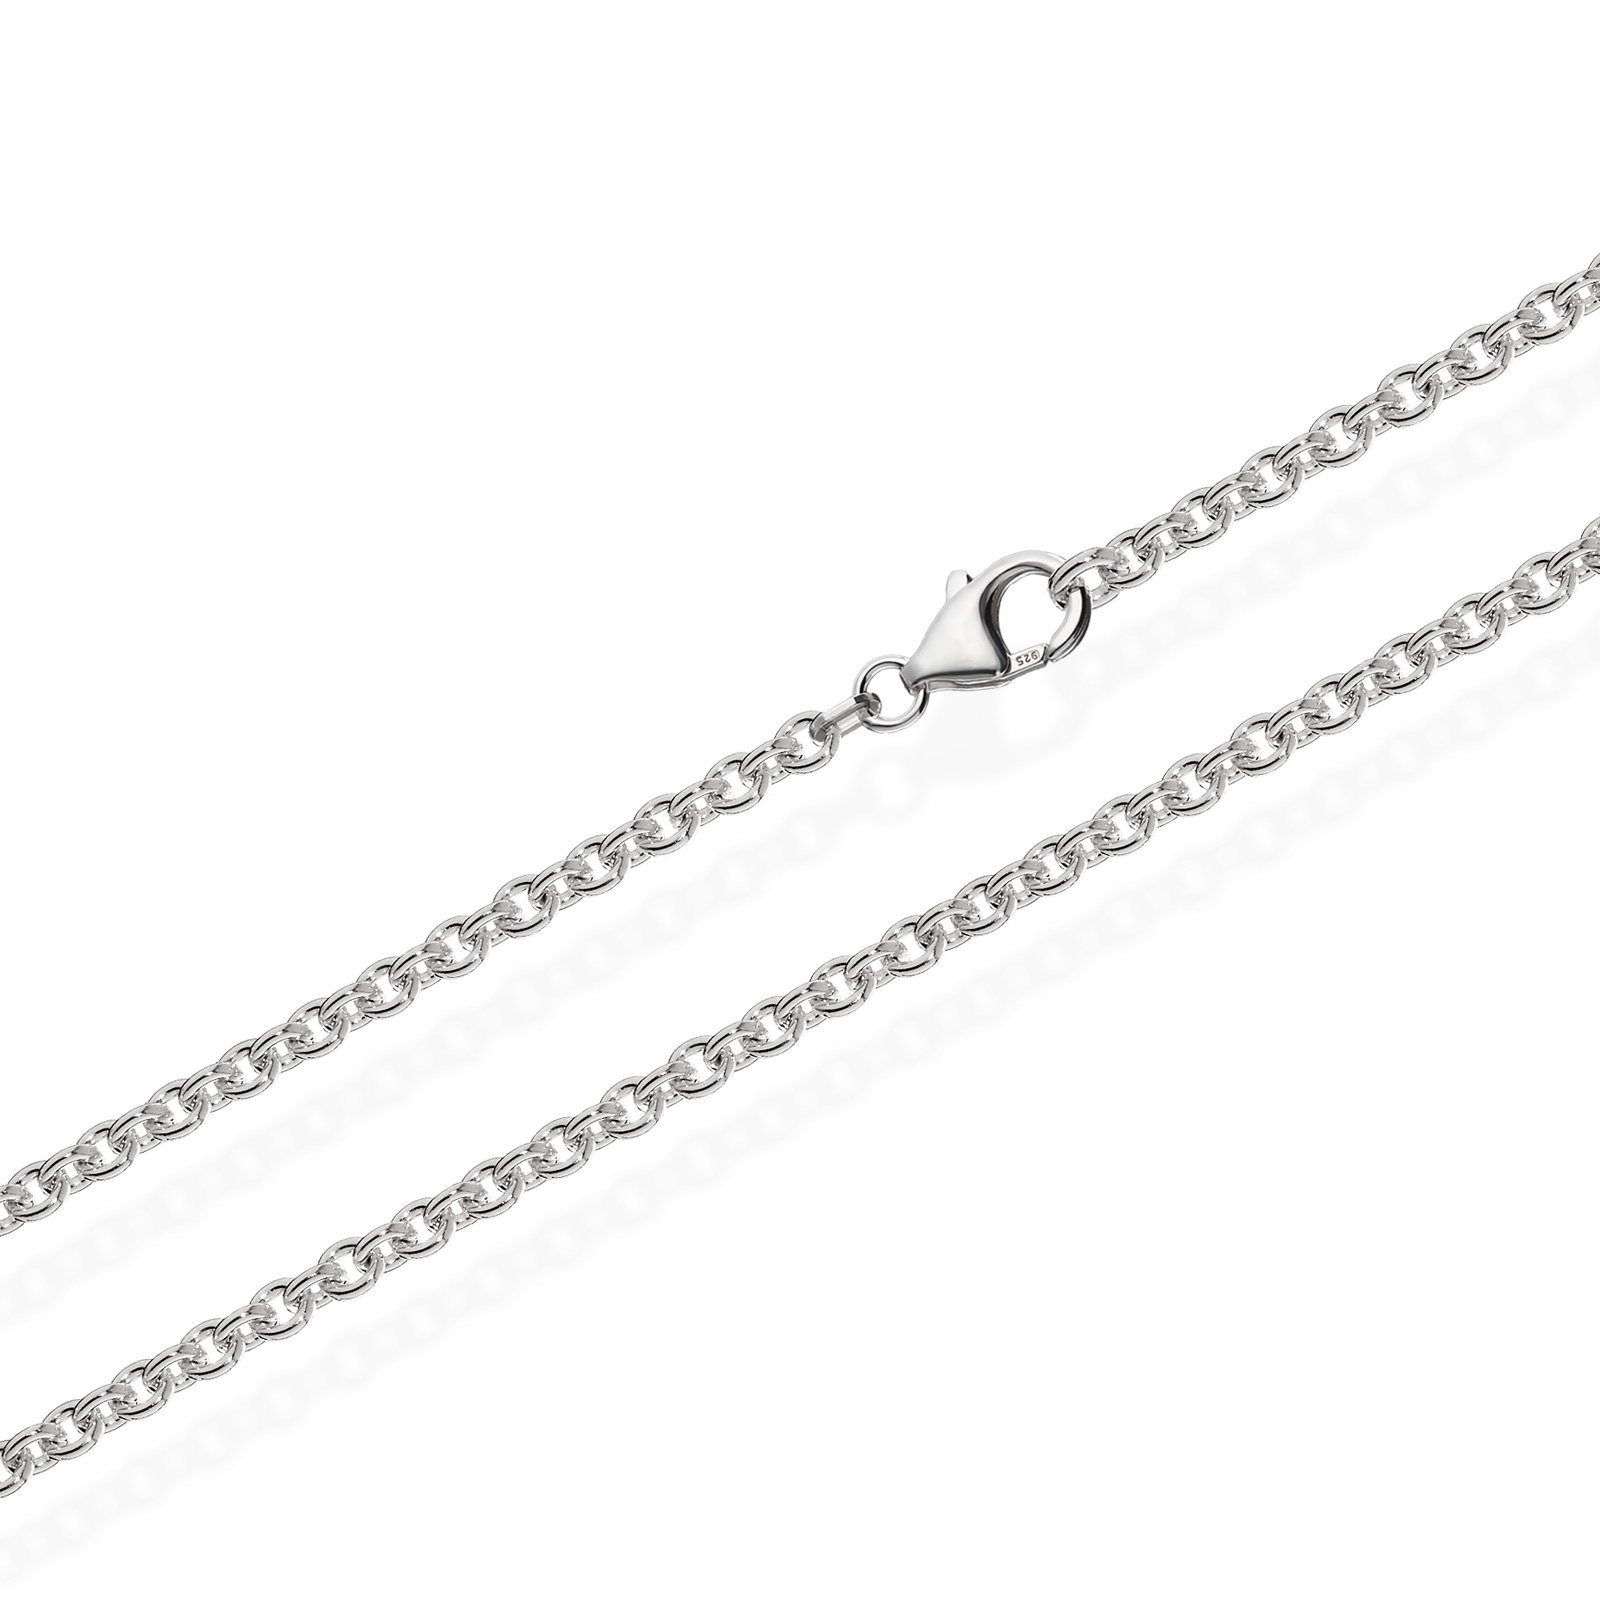 NKlaus Silberkette 45cm Ankerkette 925 Sterling Silber Kette Rund Mas | Silberketten